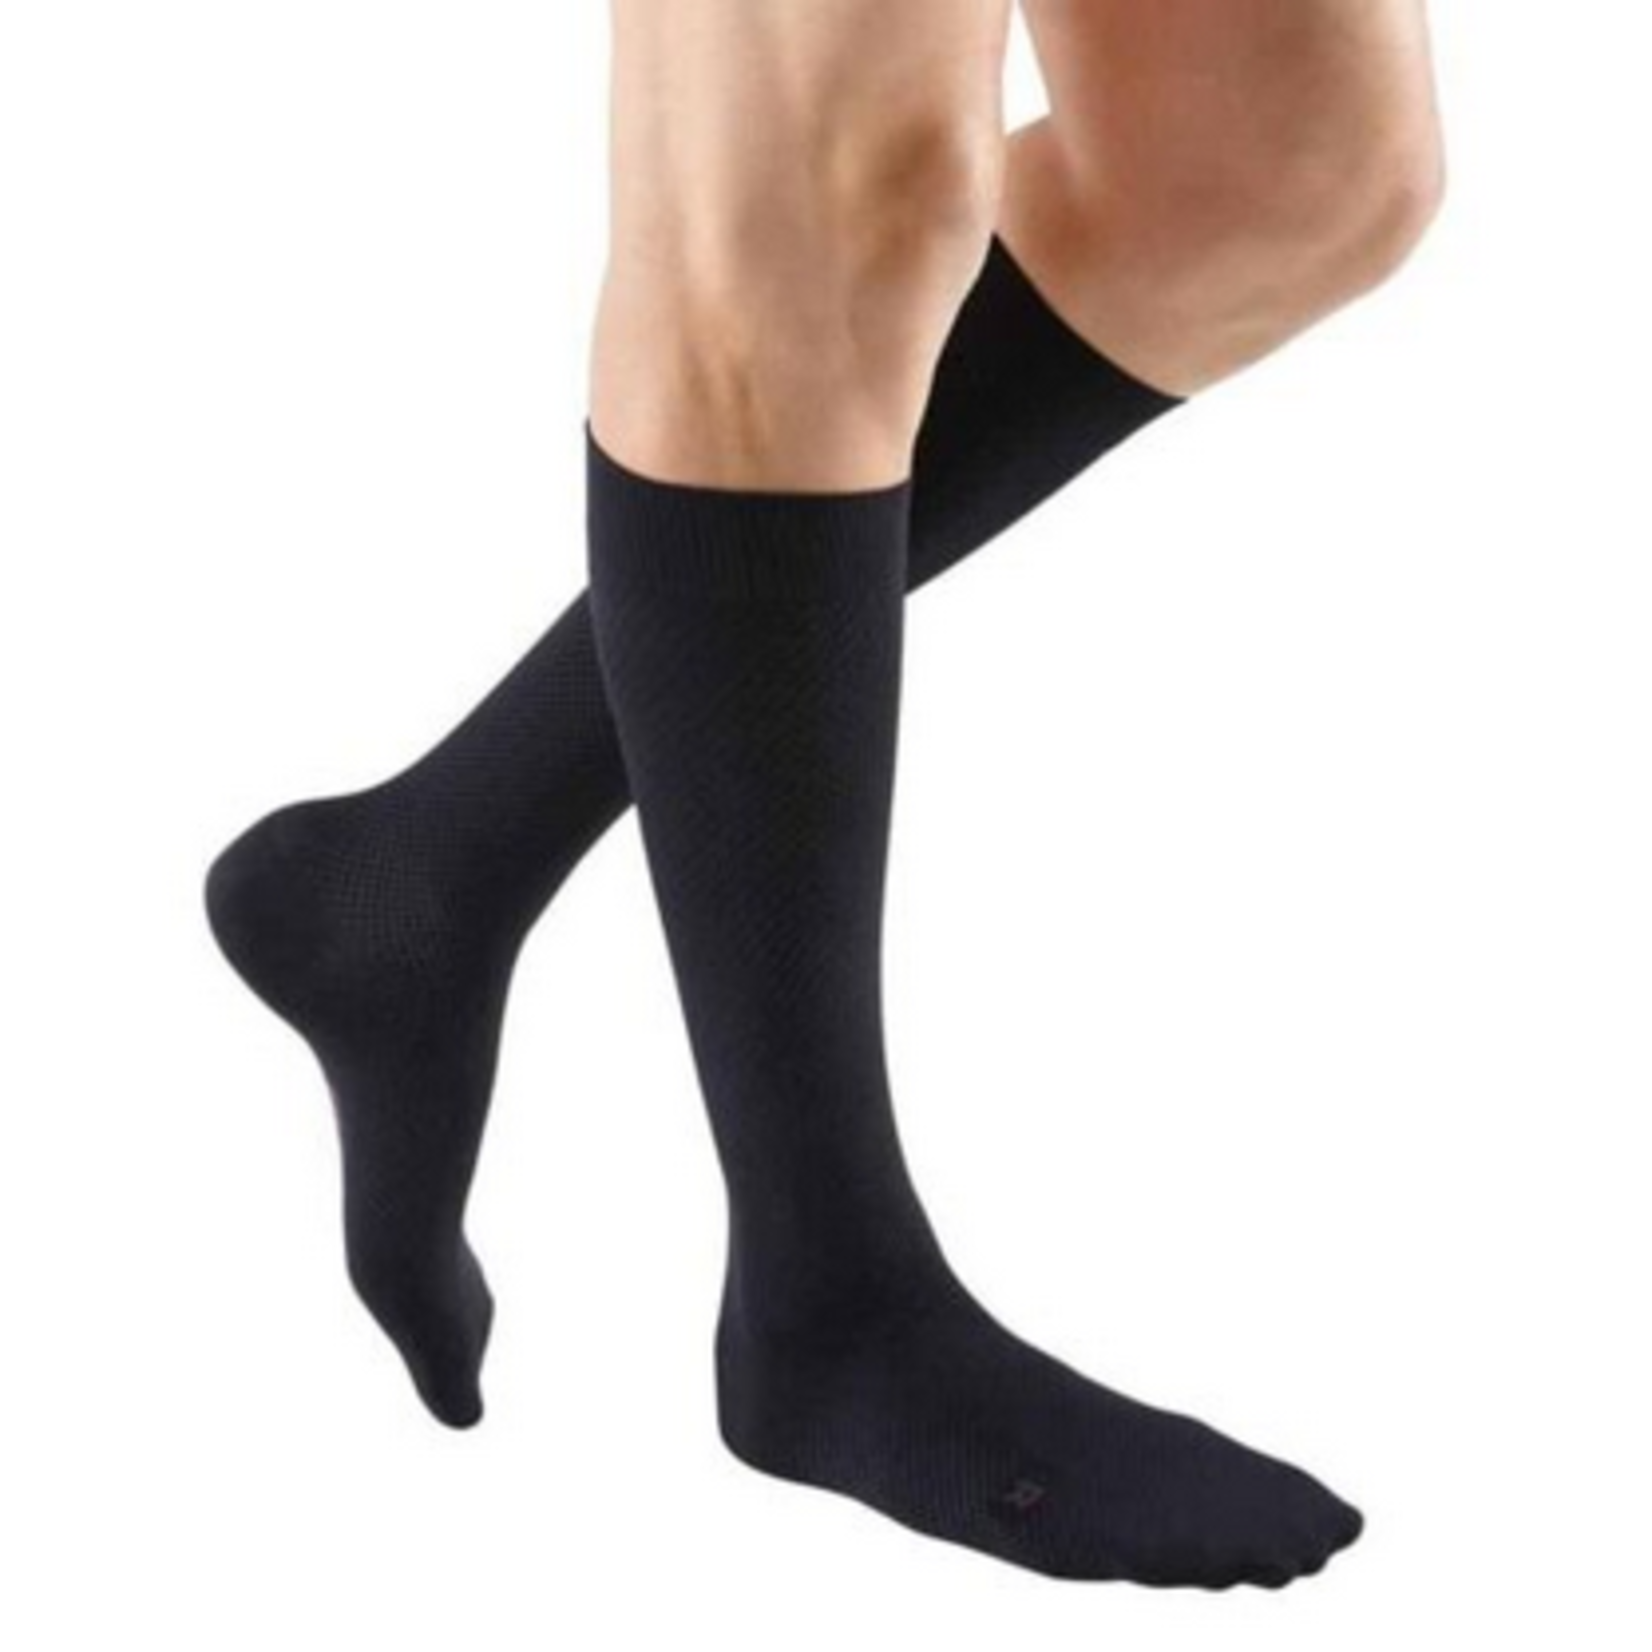 Medi Mediven S040 15-20 mmhg For Men Select Calf Standard Coed Toe ...